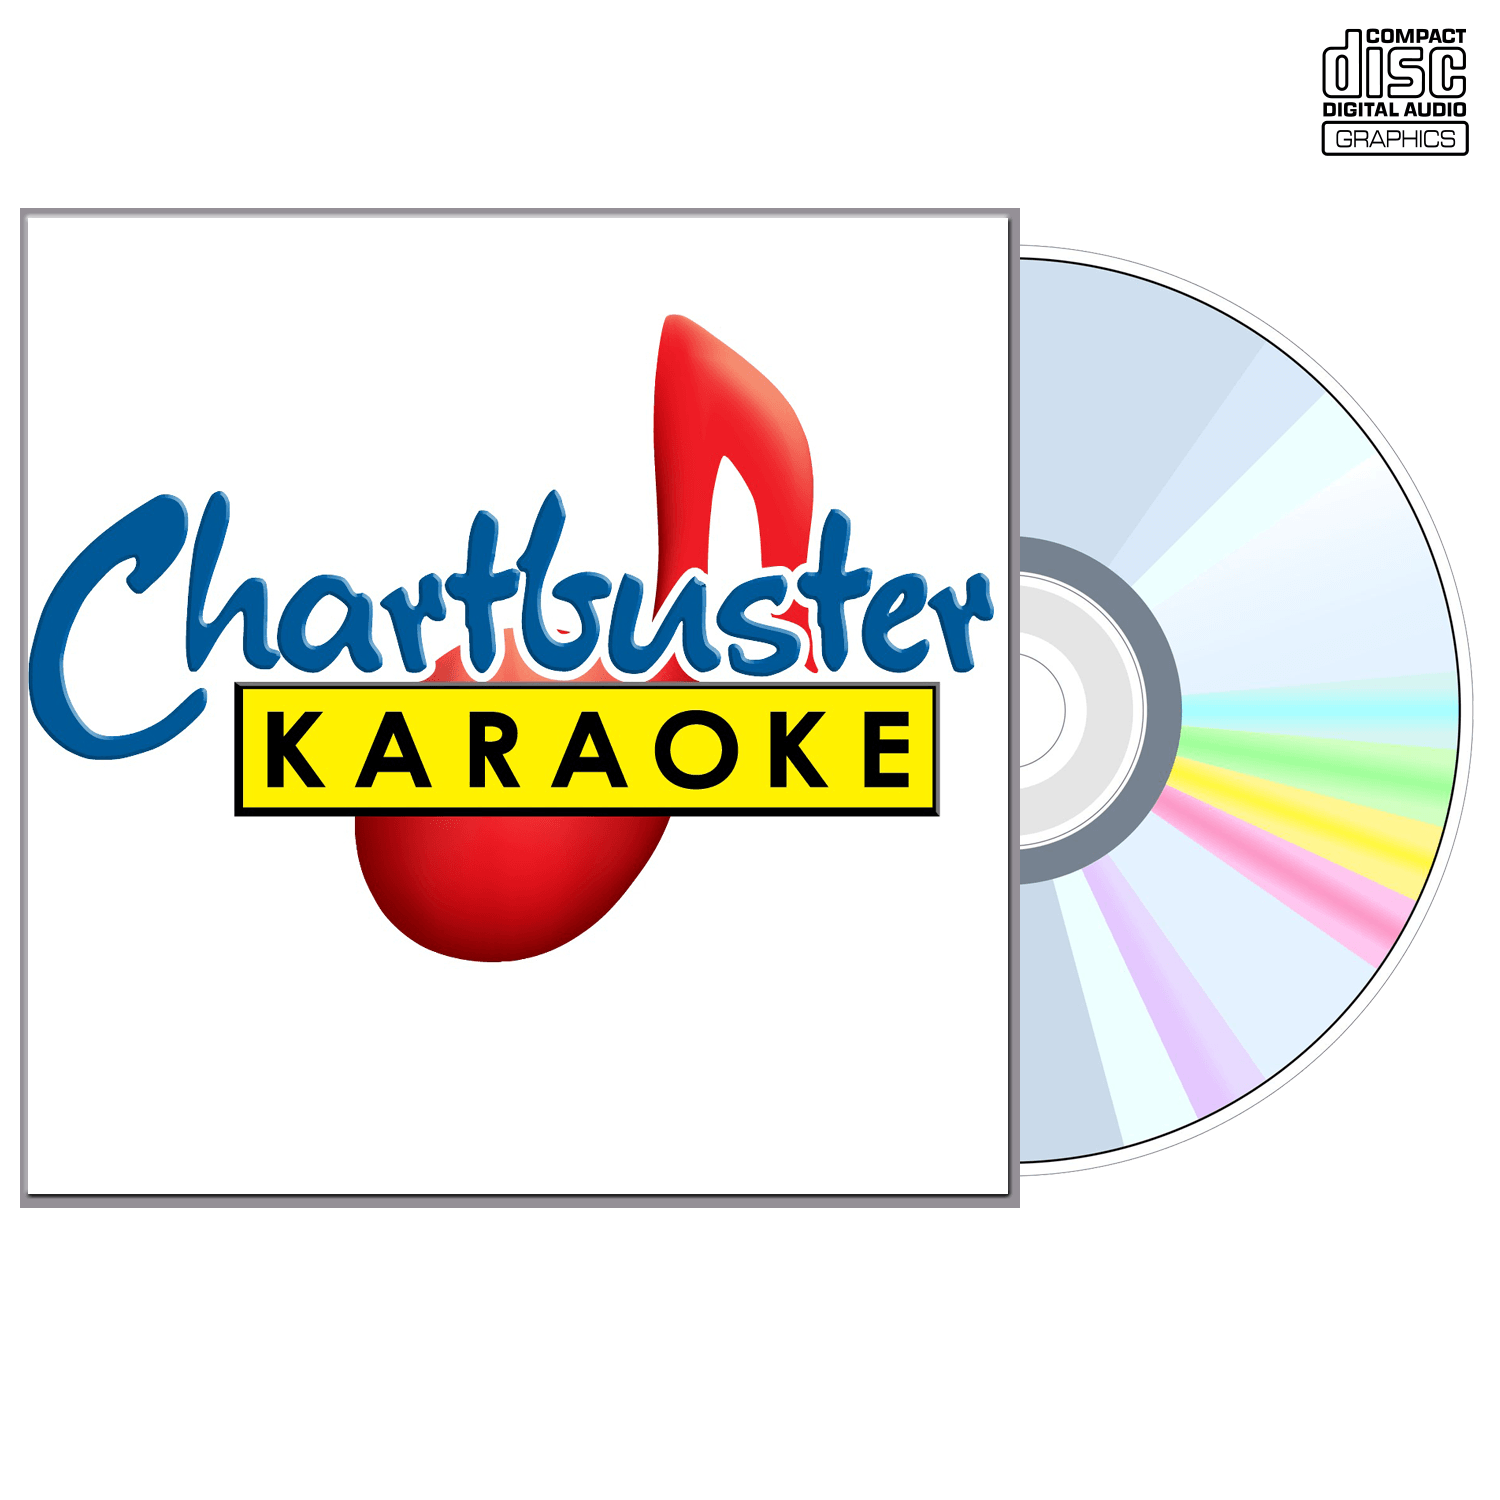 Ricky Nelson - CD+G - Chartbuster Karaoke - Karaoke Home Entertainment